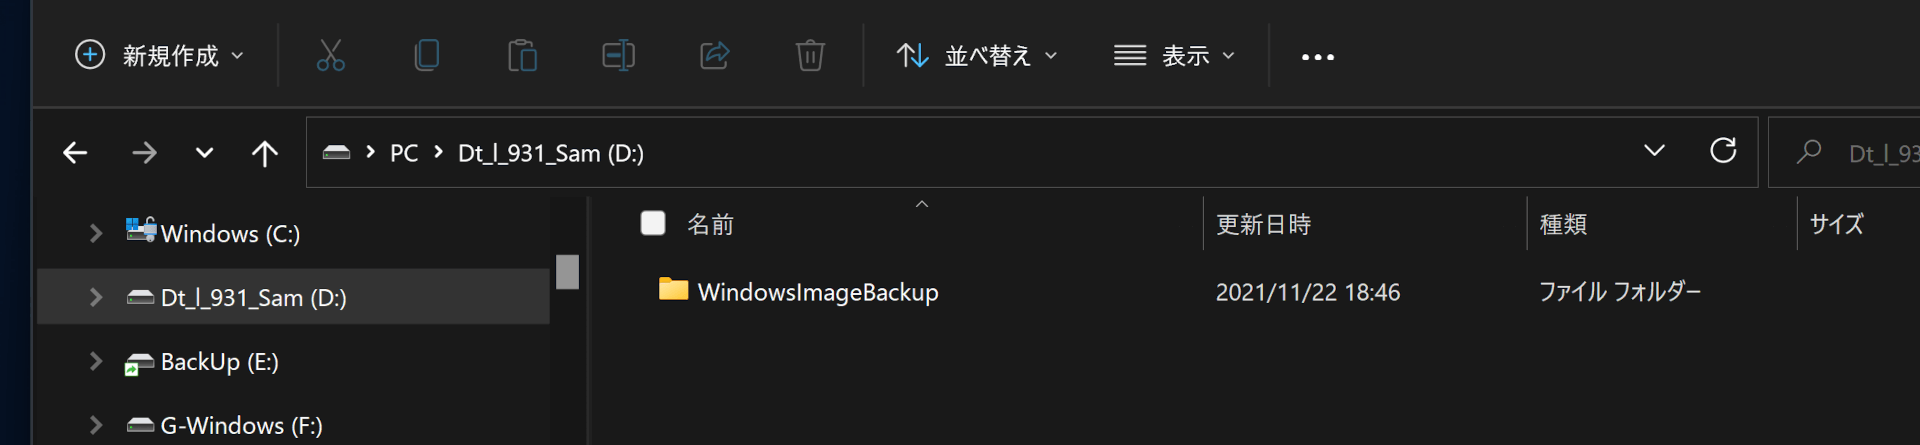 WindowsImageBackup